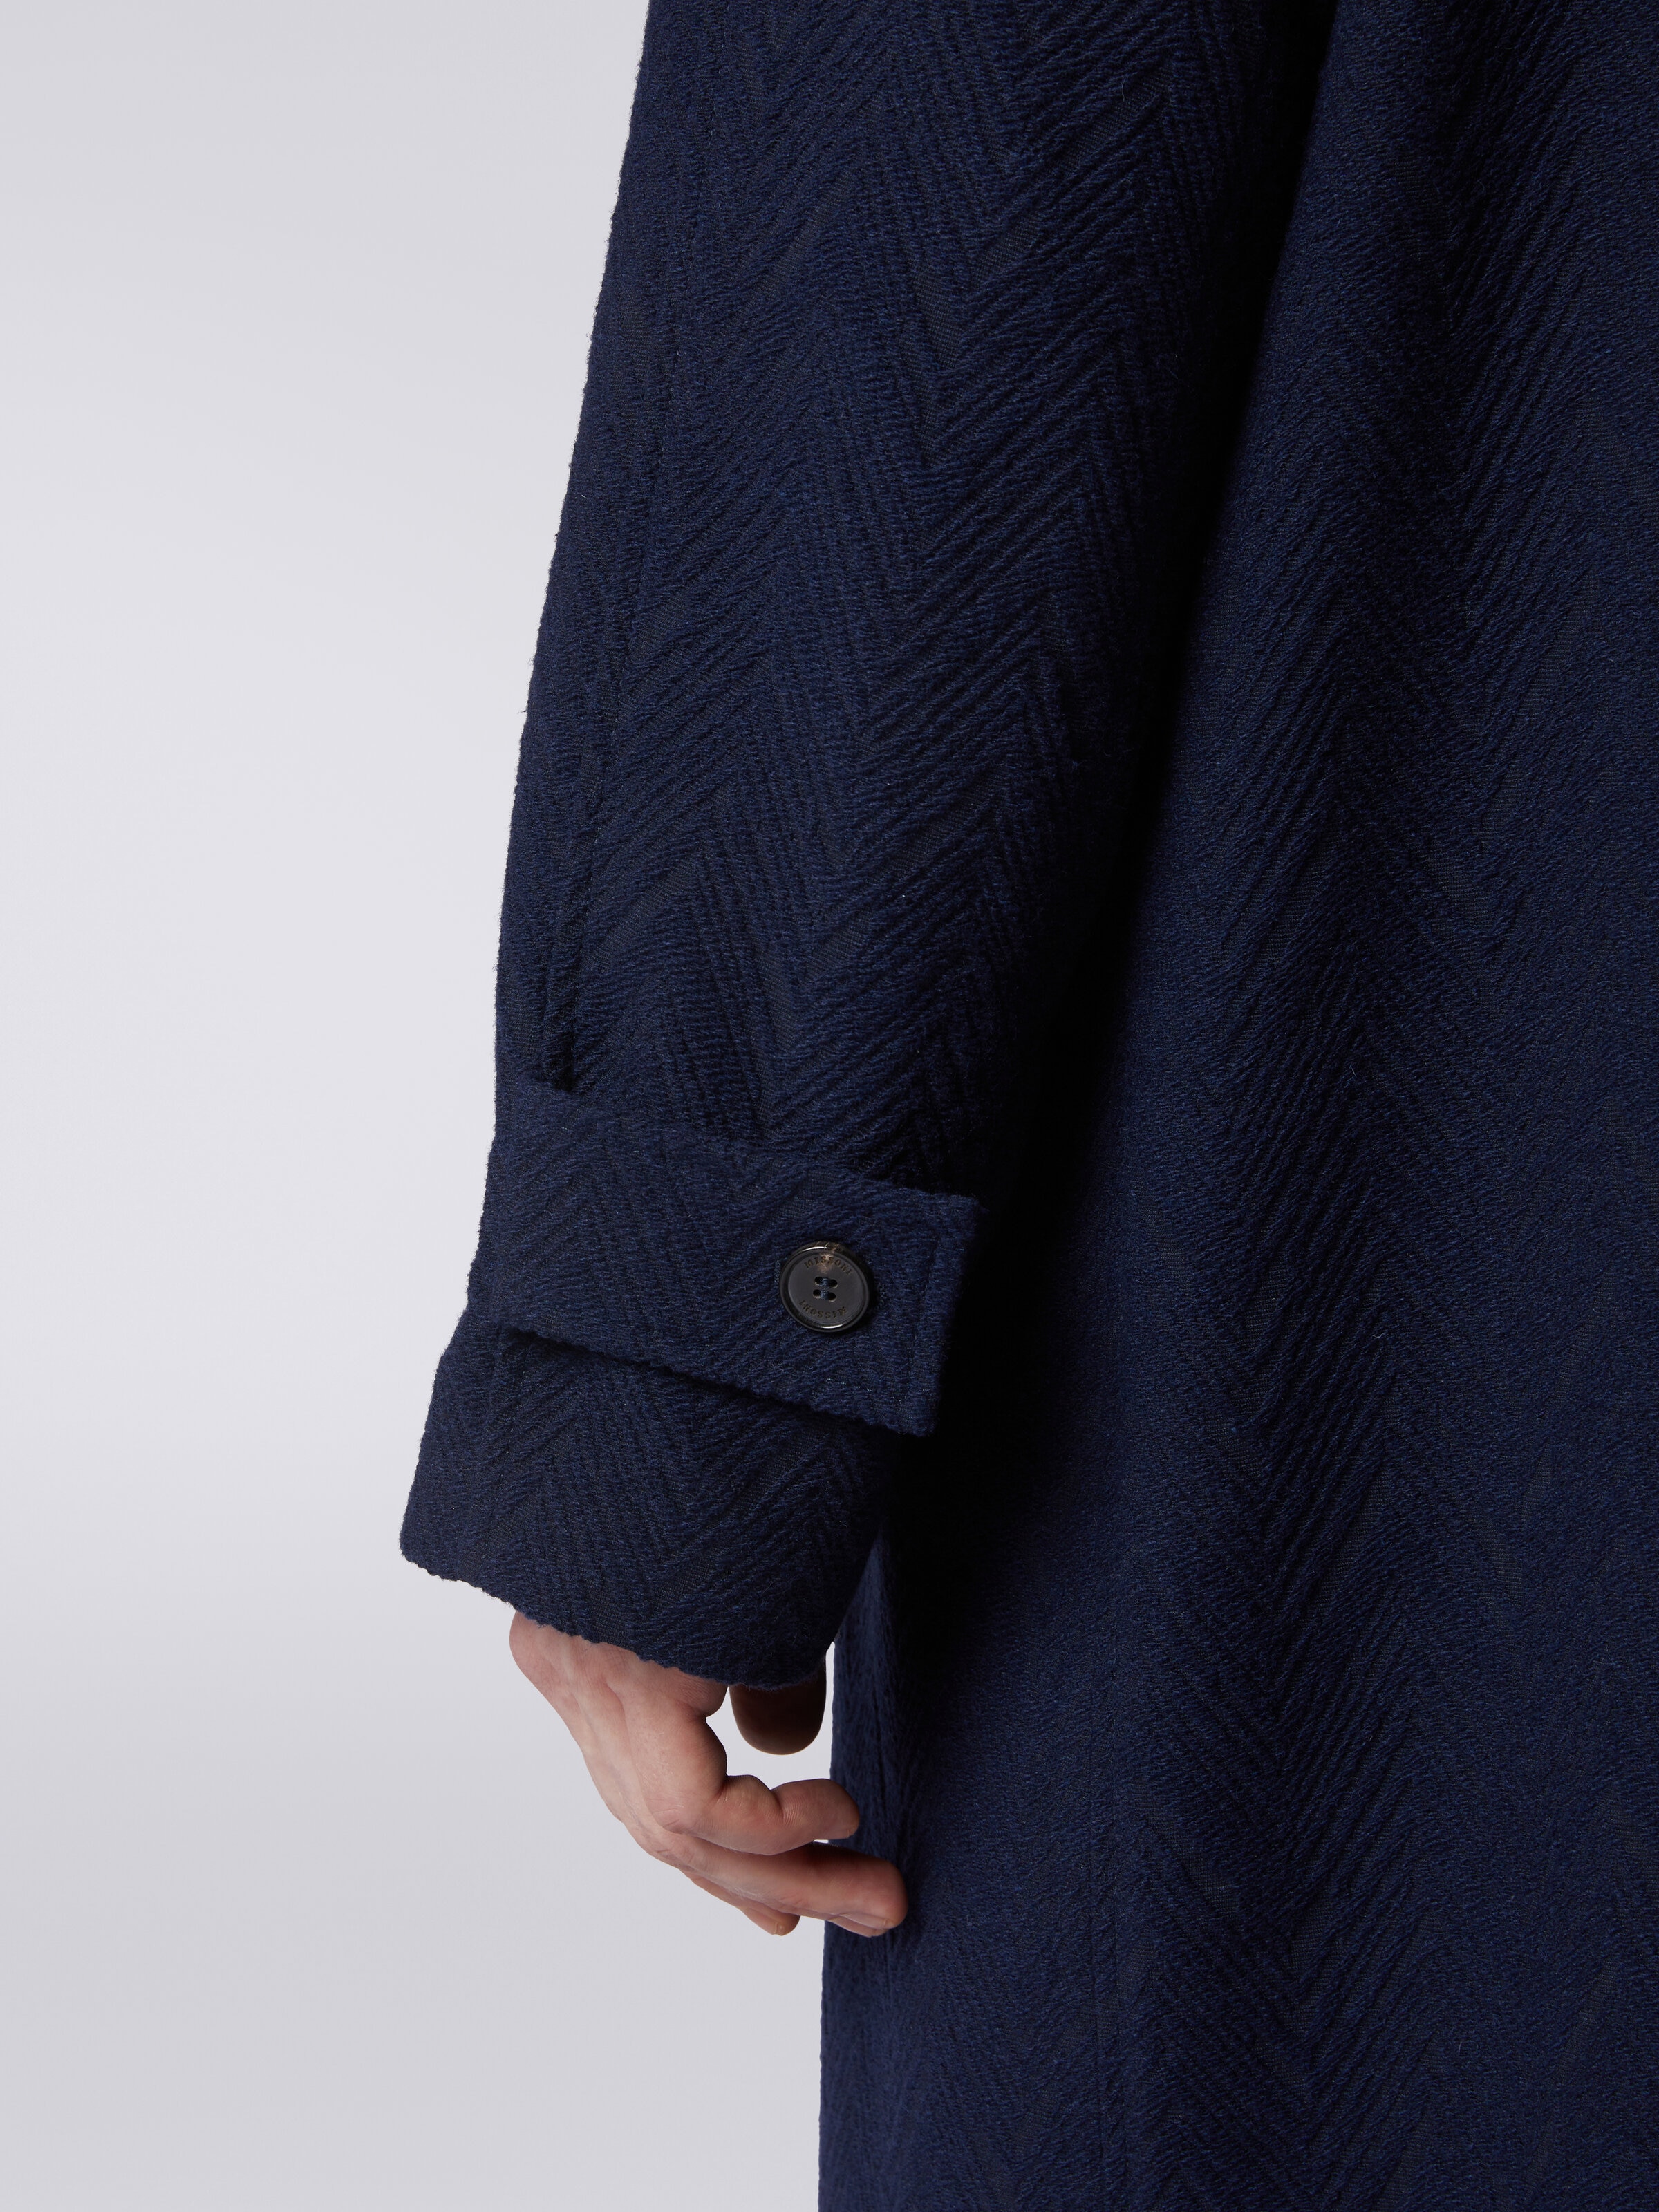 Jacquard wool blend coat with zigzag pattern, Dark Blue - 4